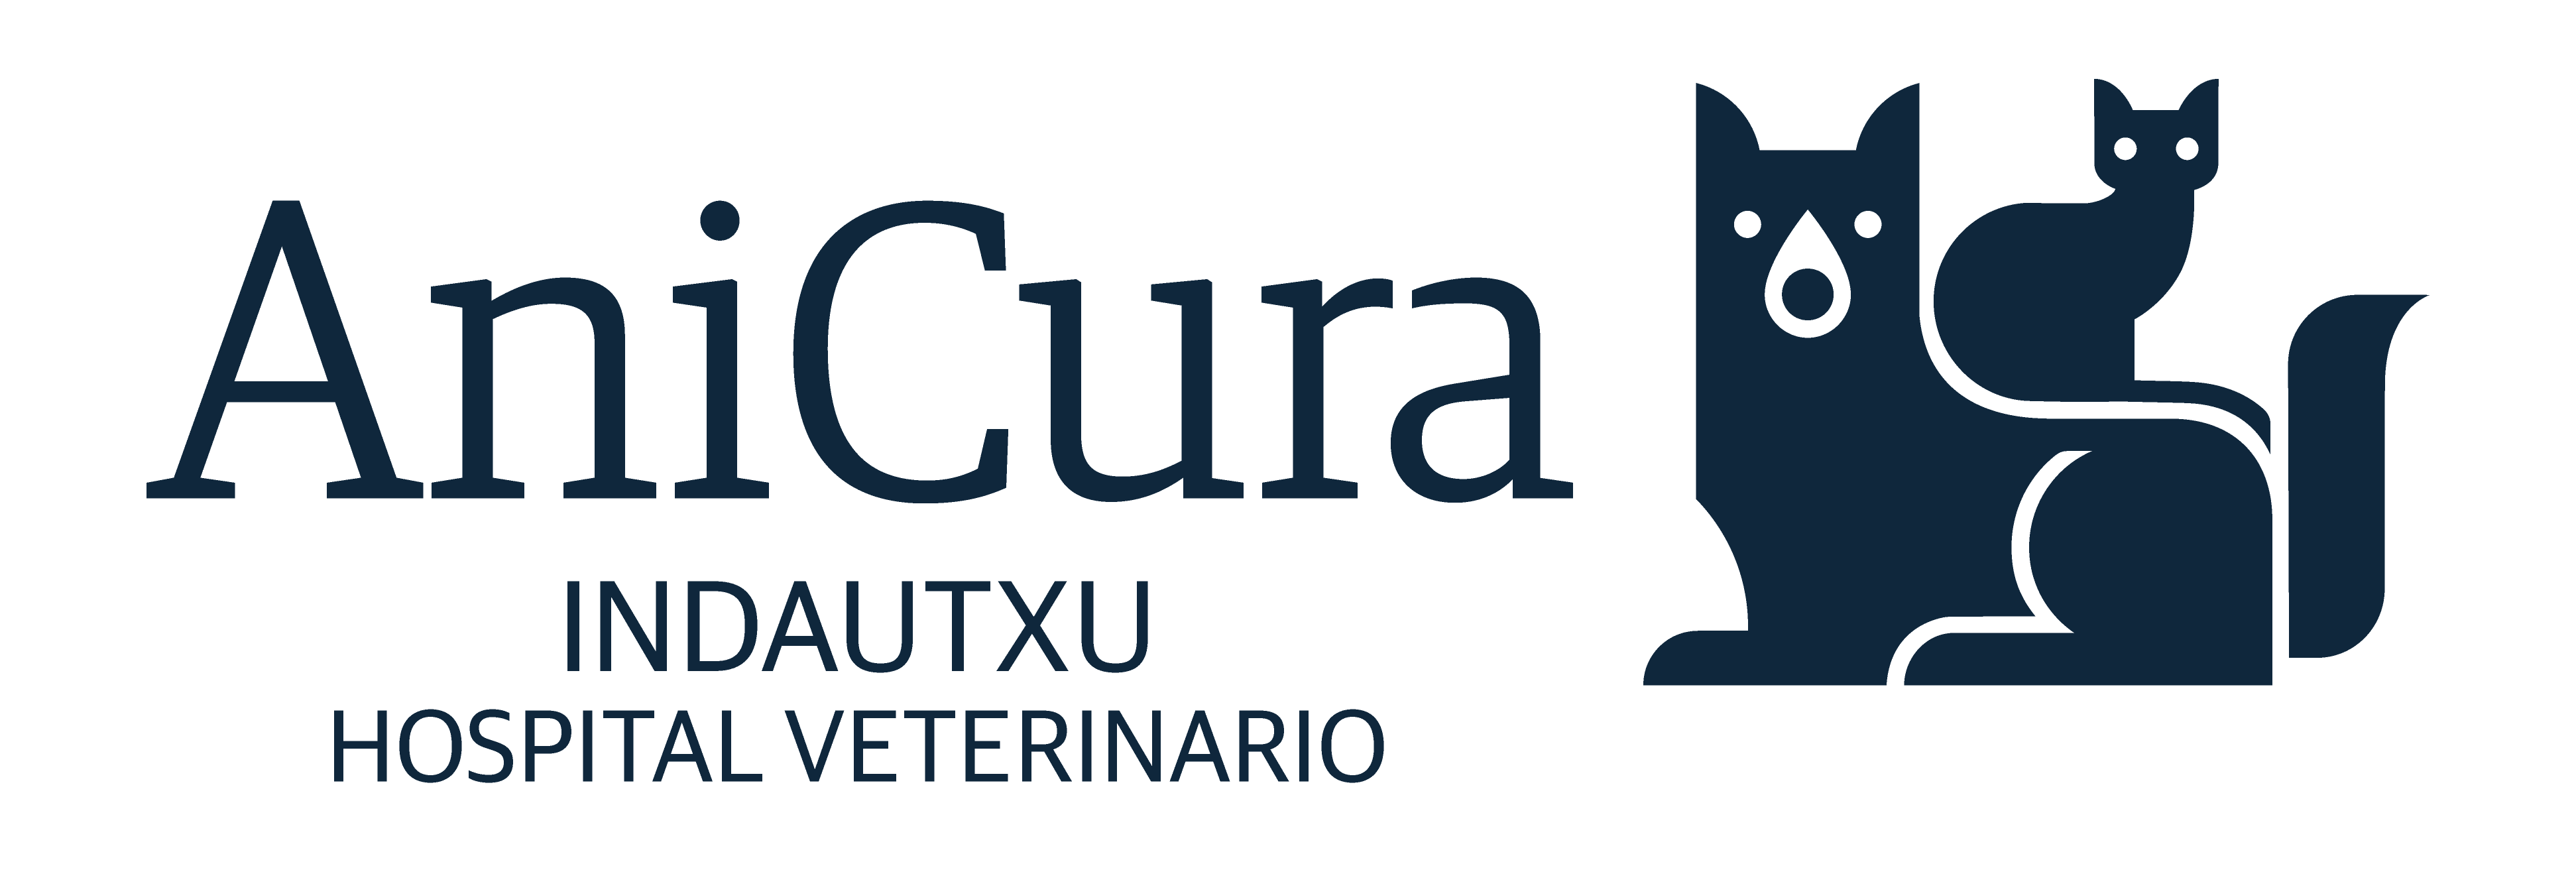 AniCura Indautxu Hospital Veterinario logo